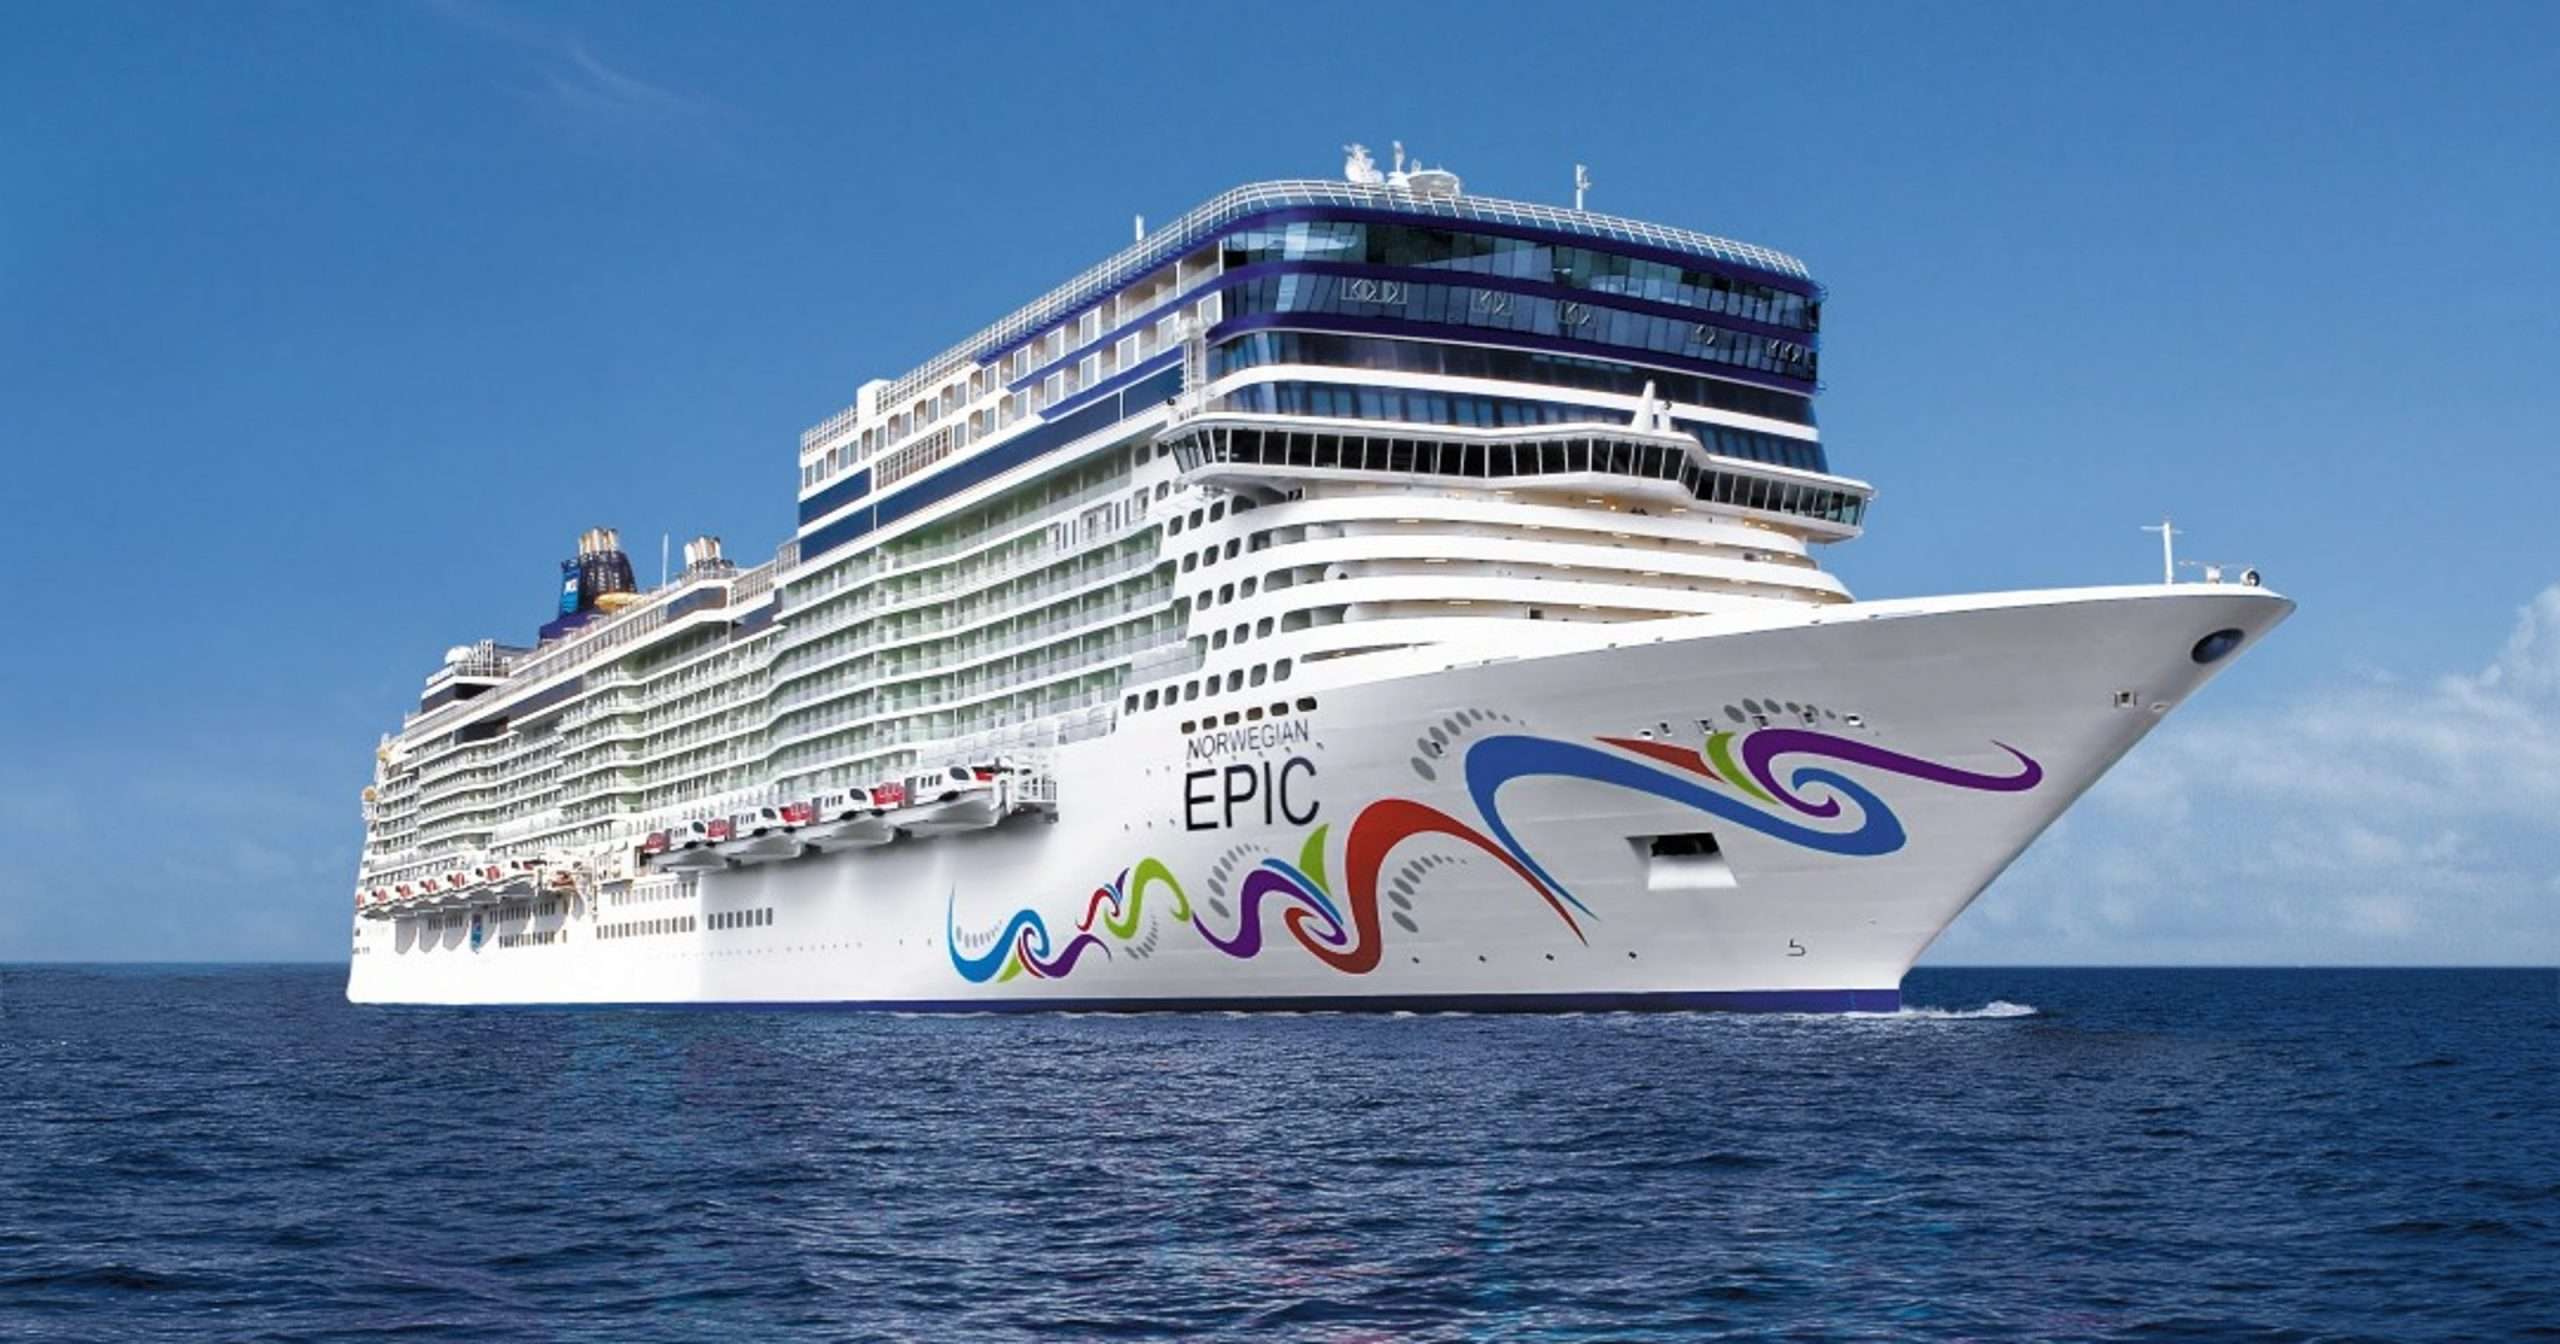 Giant cruise ship to sail from Southampton, England